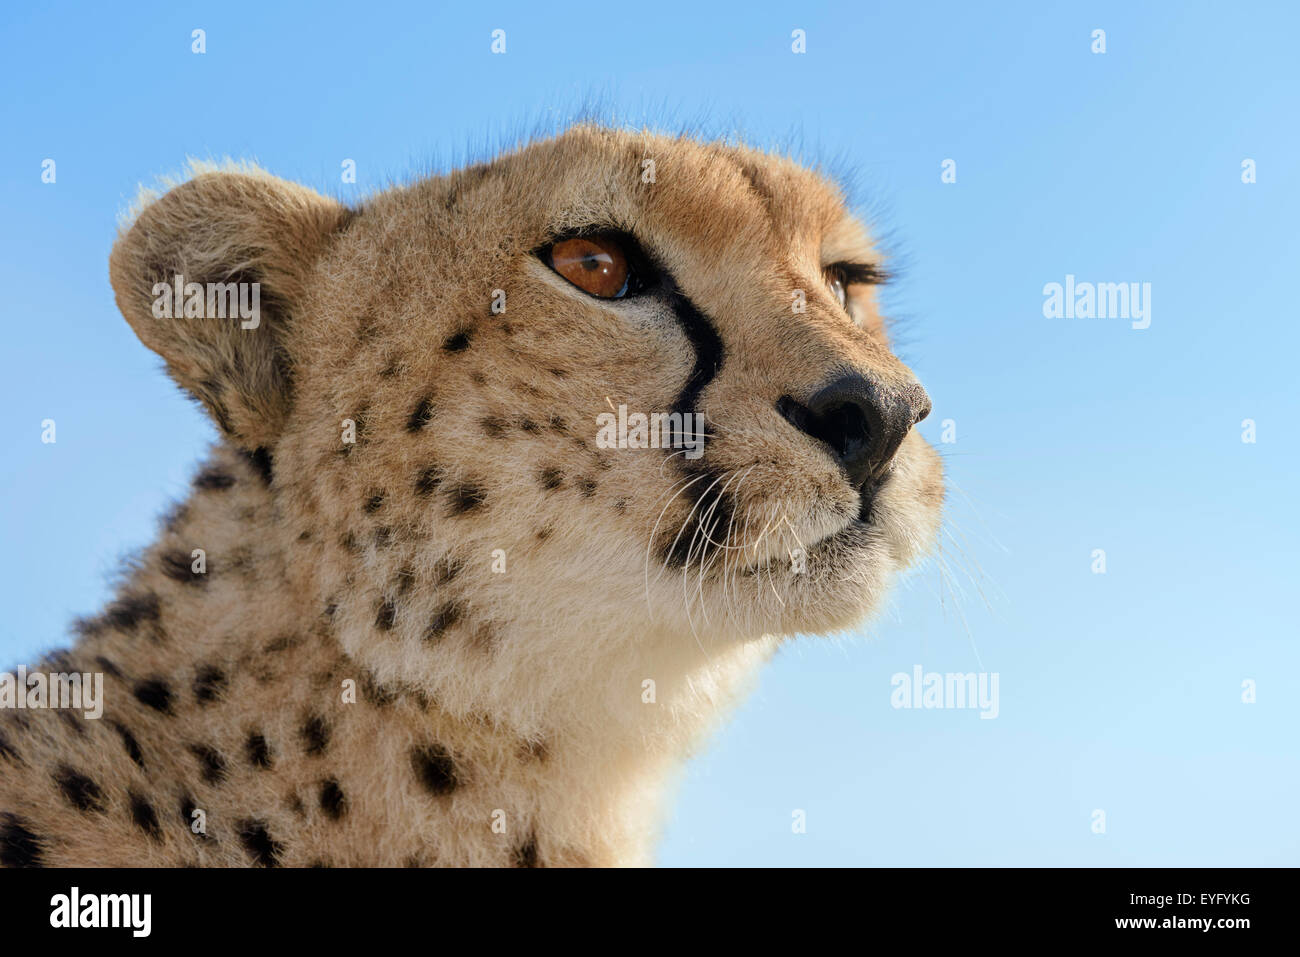 Cheetah (Acinonyx jubatus), female, portrait, against a blue sky, Maasai Mara National Reserve, Kenya Stock Photo